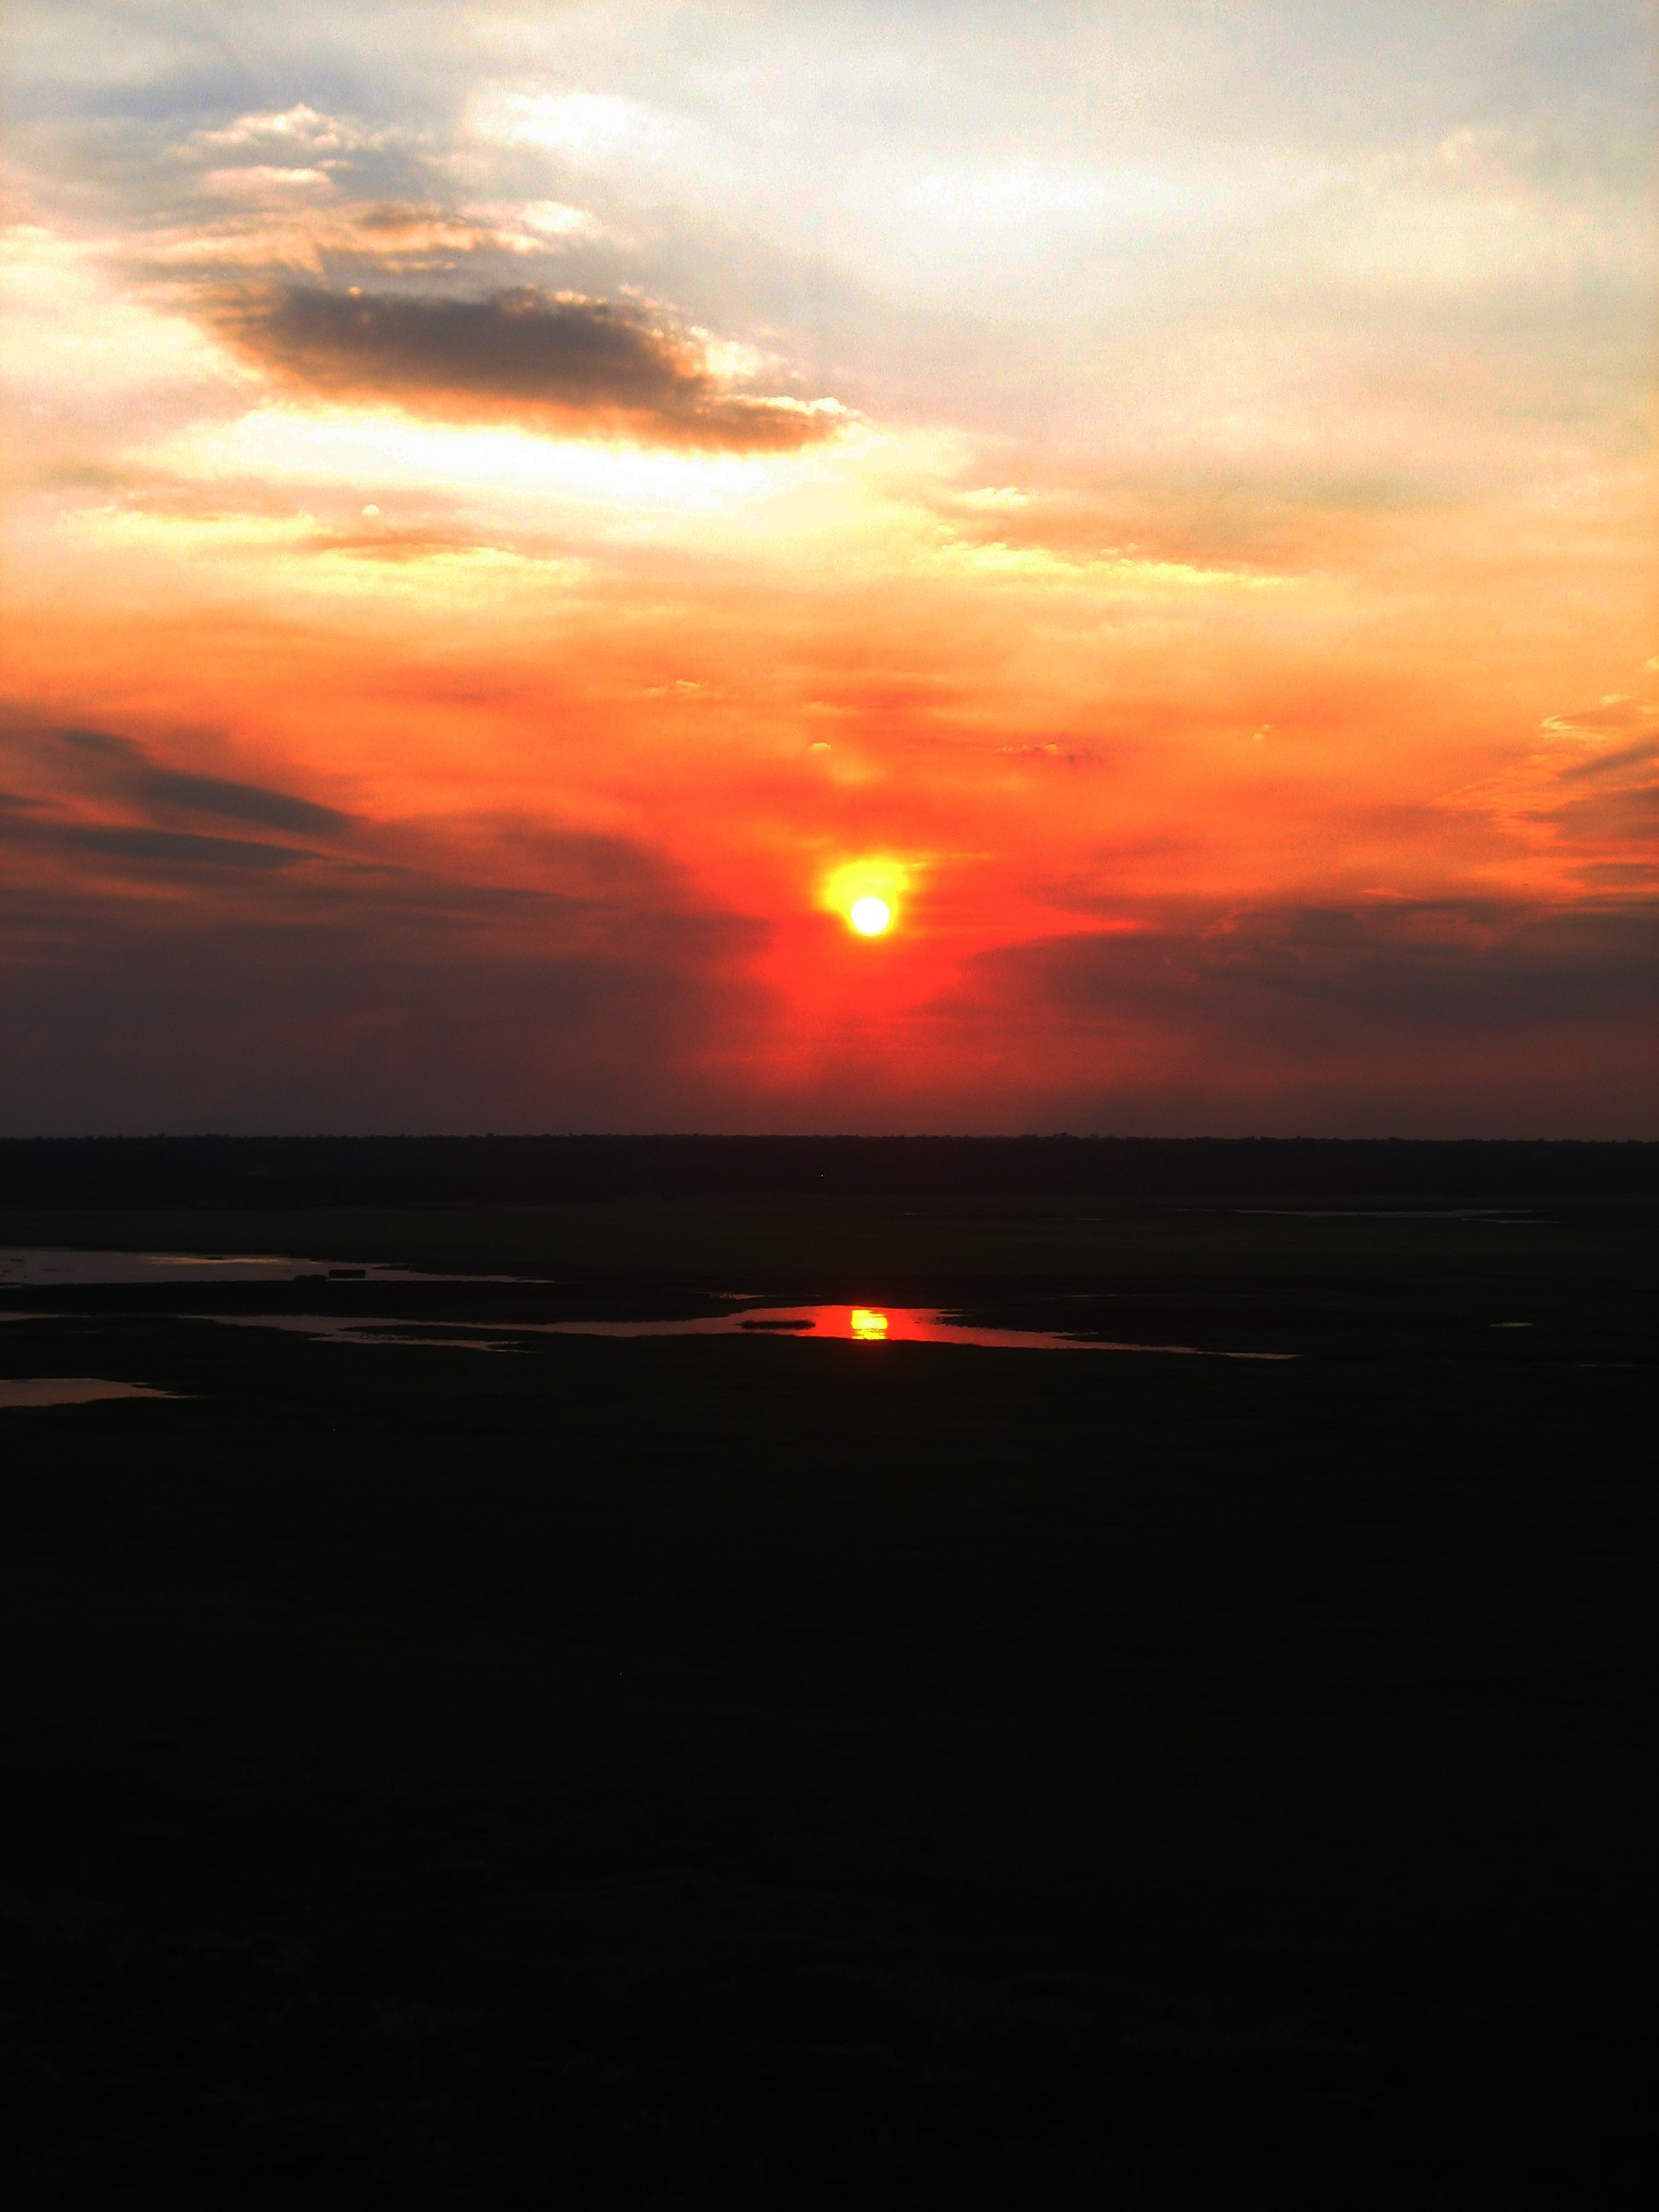 Ubirr Rock sunset, Northern Territory (8852637022)